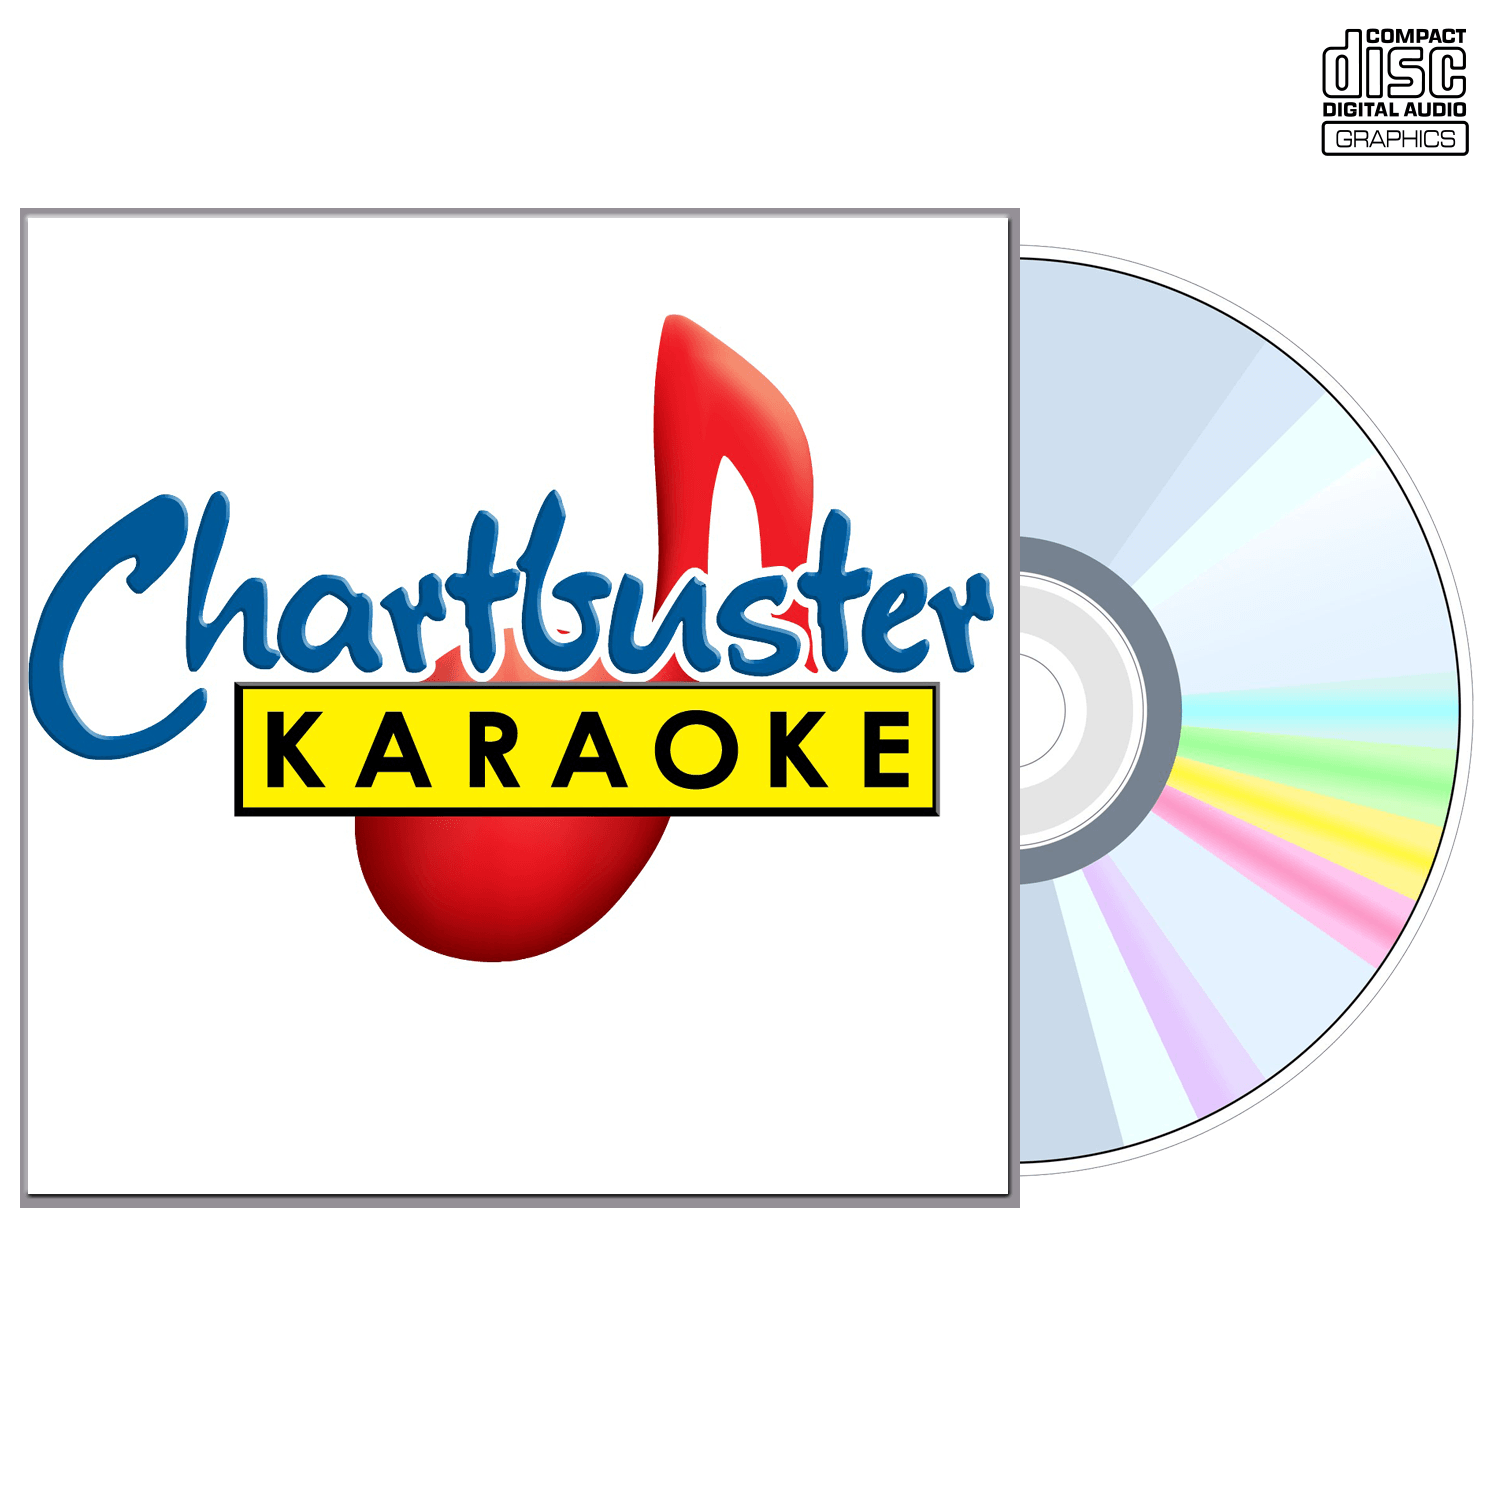 Rod Stewart Vol 2 - CD+G - Chartbuster Karaoke - Karaoke Home Entertainment